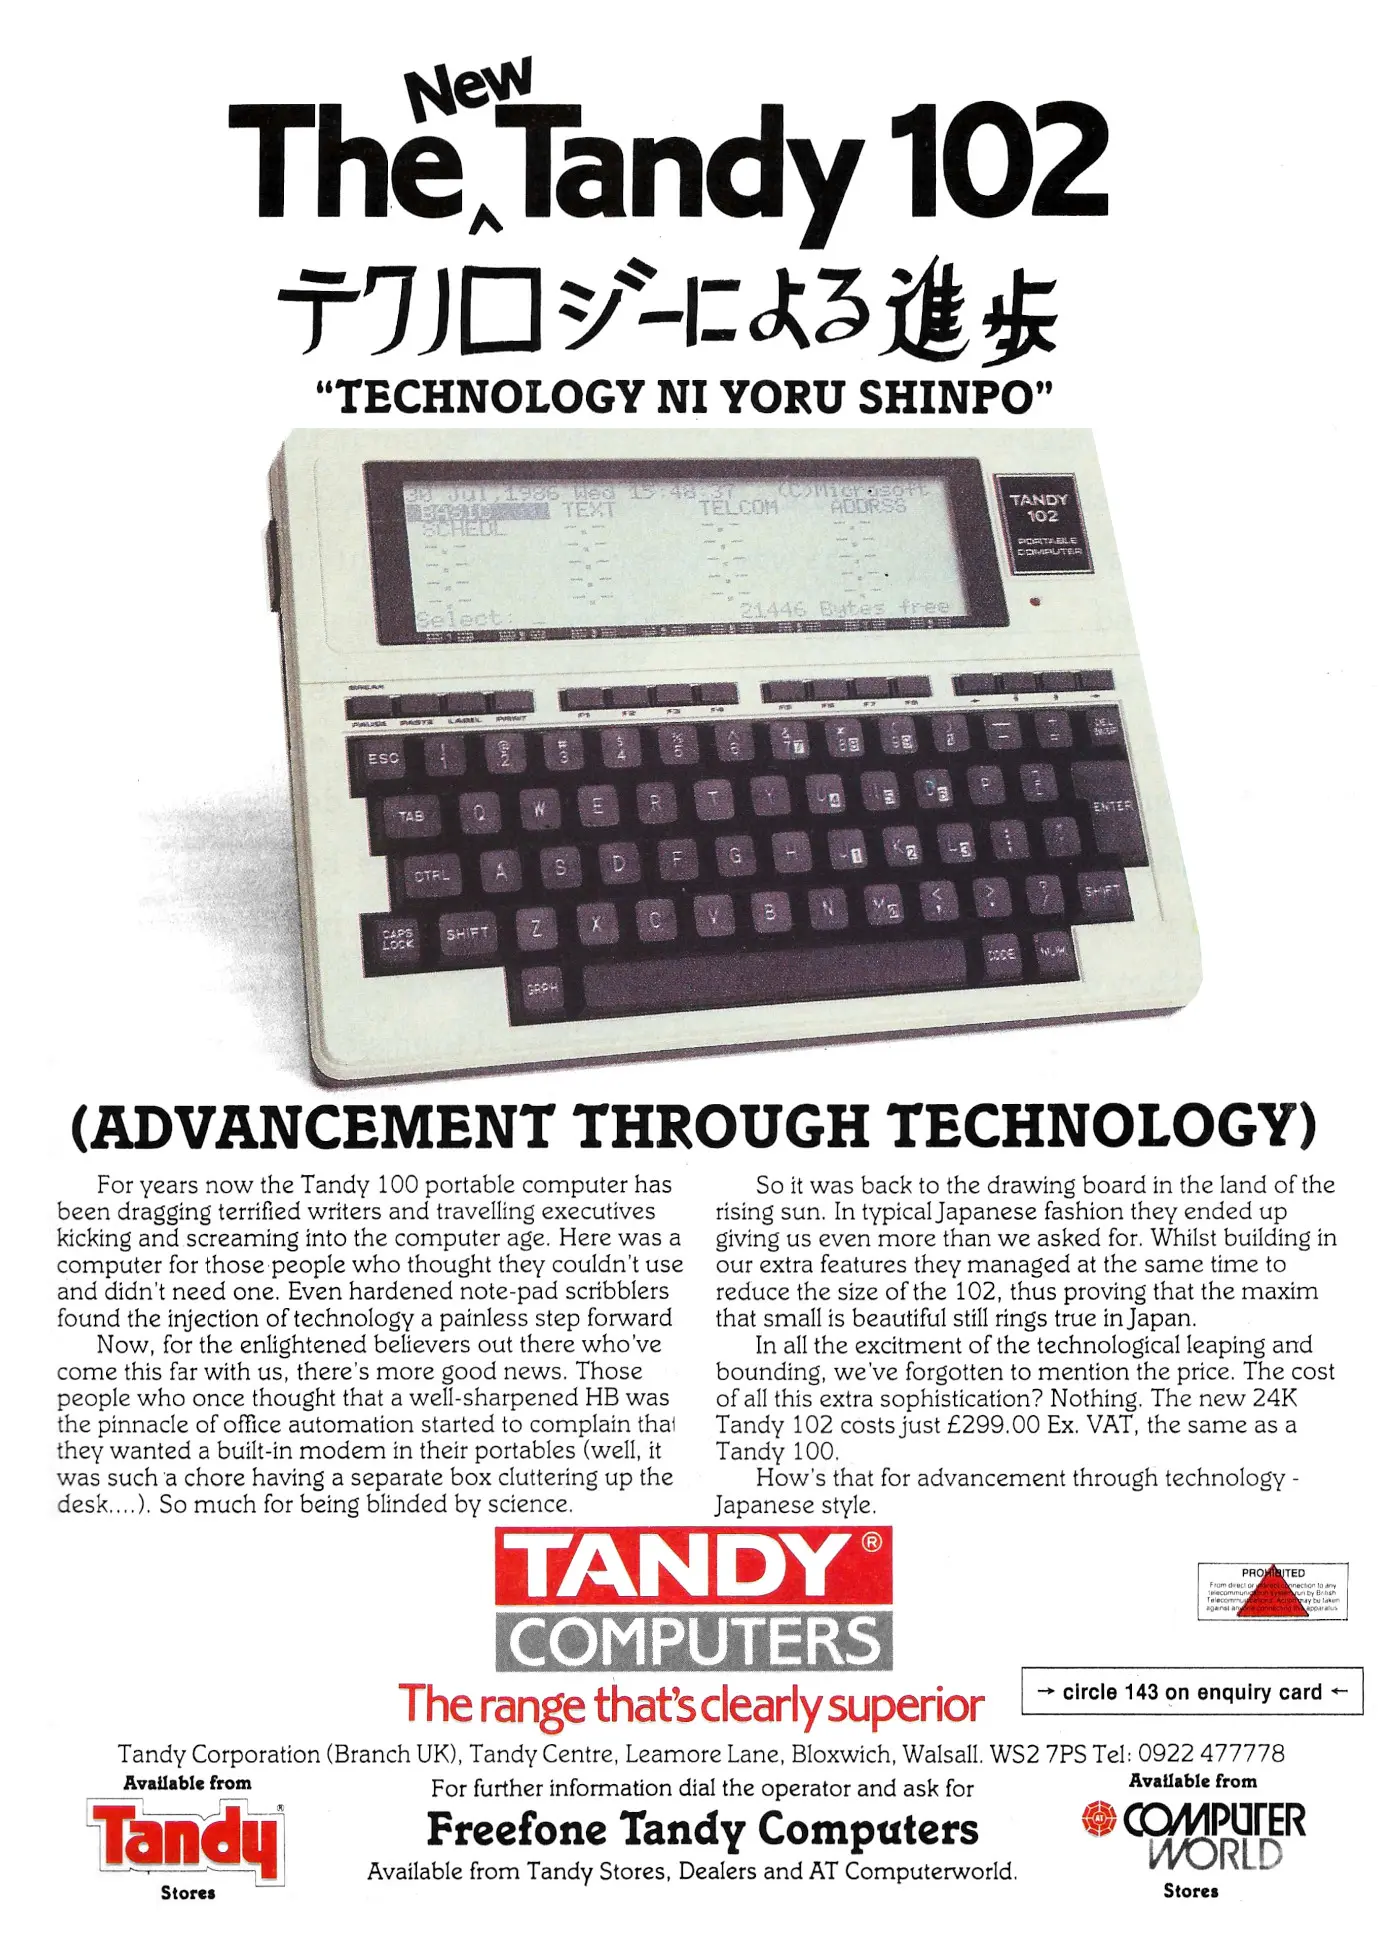 Tandy/Radio Shack Advert: The New Tandy 102: Technology ni yoru shinpo, from Practical Computing, December 1986